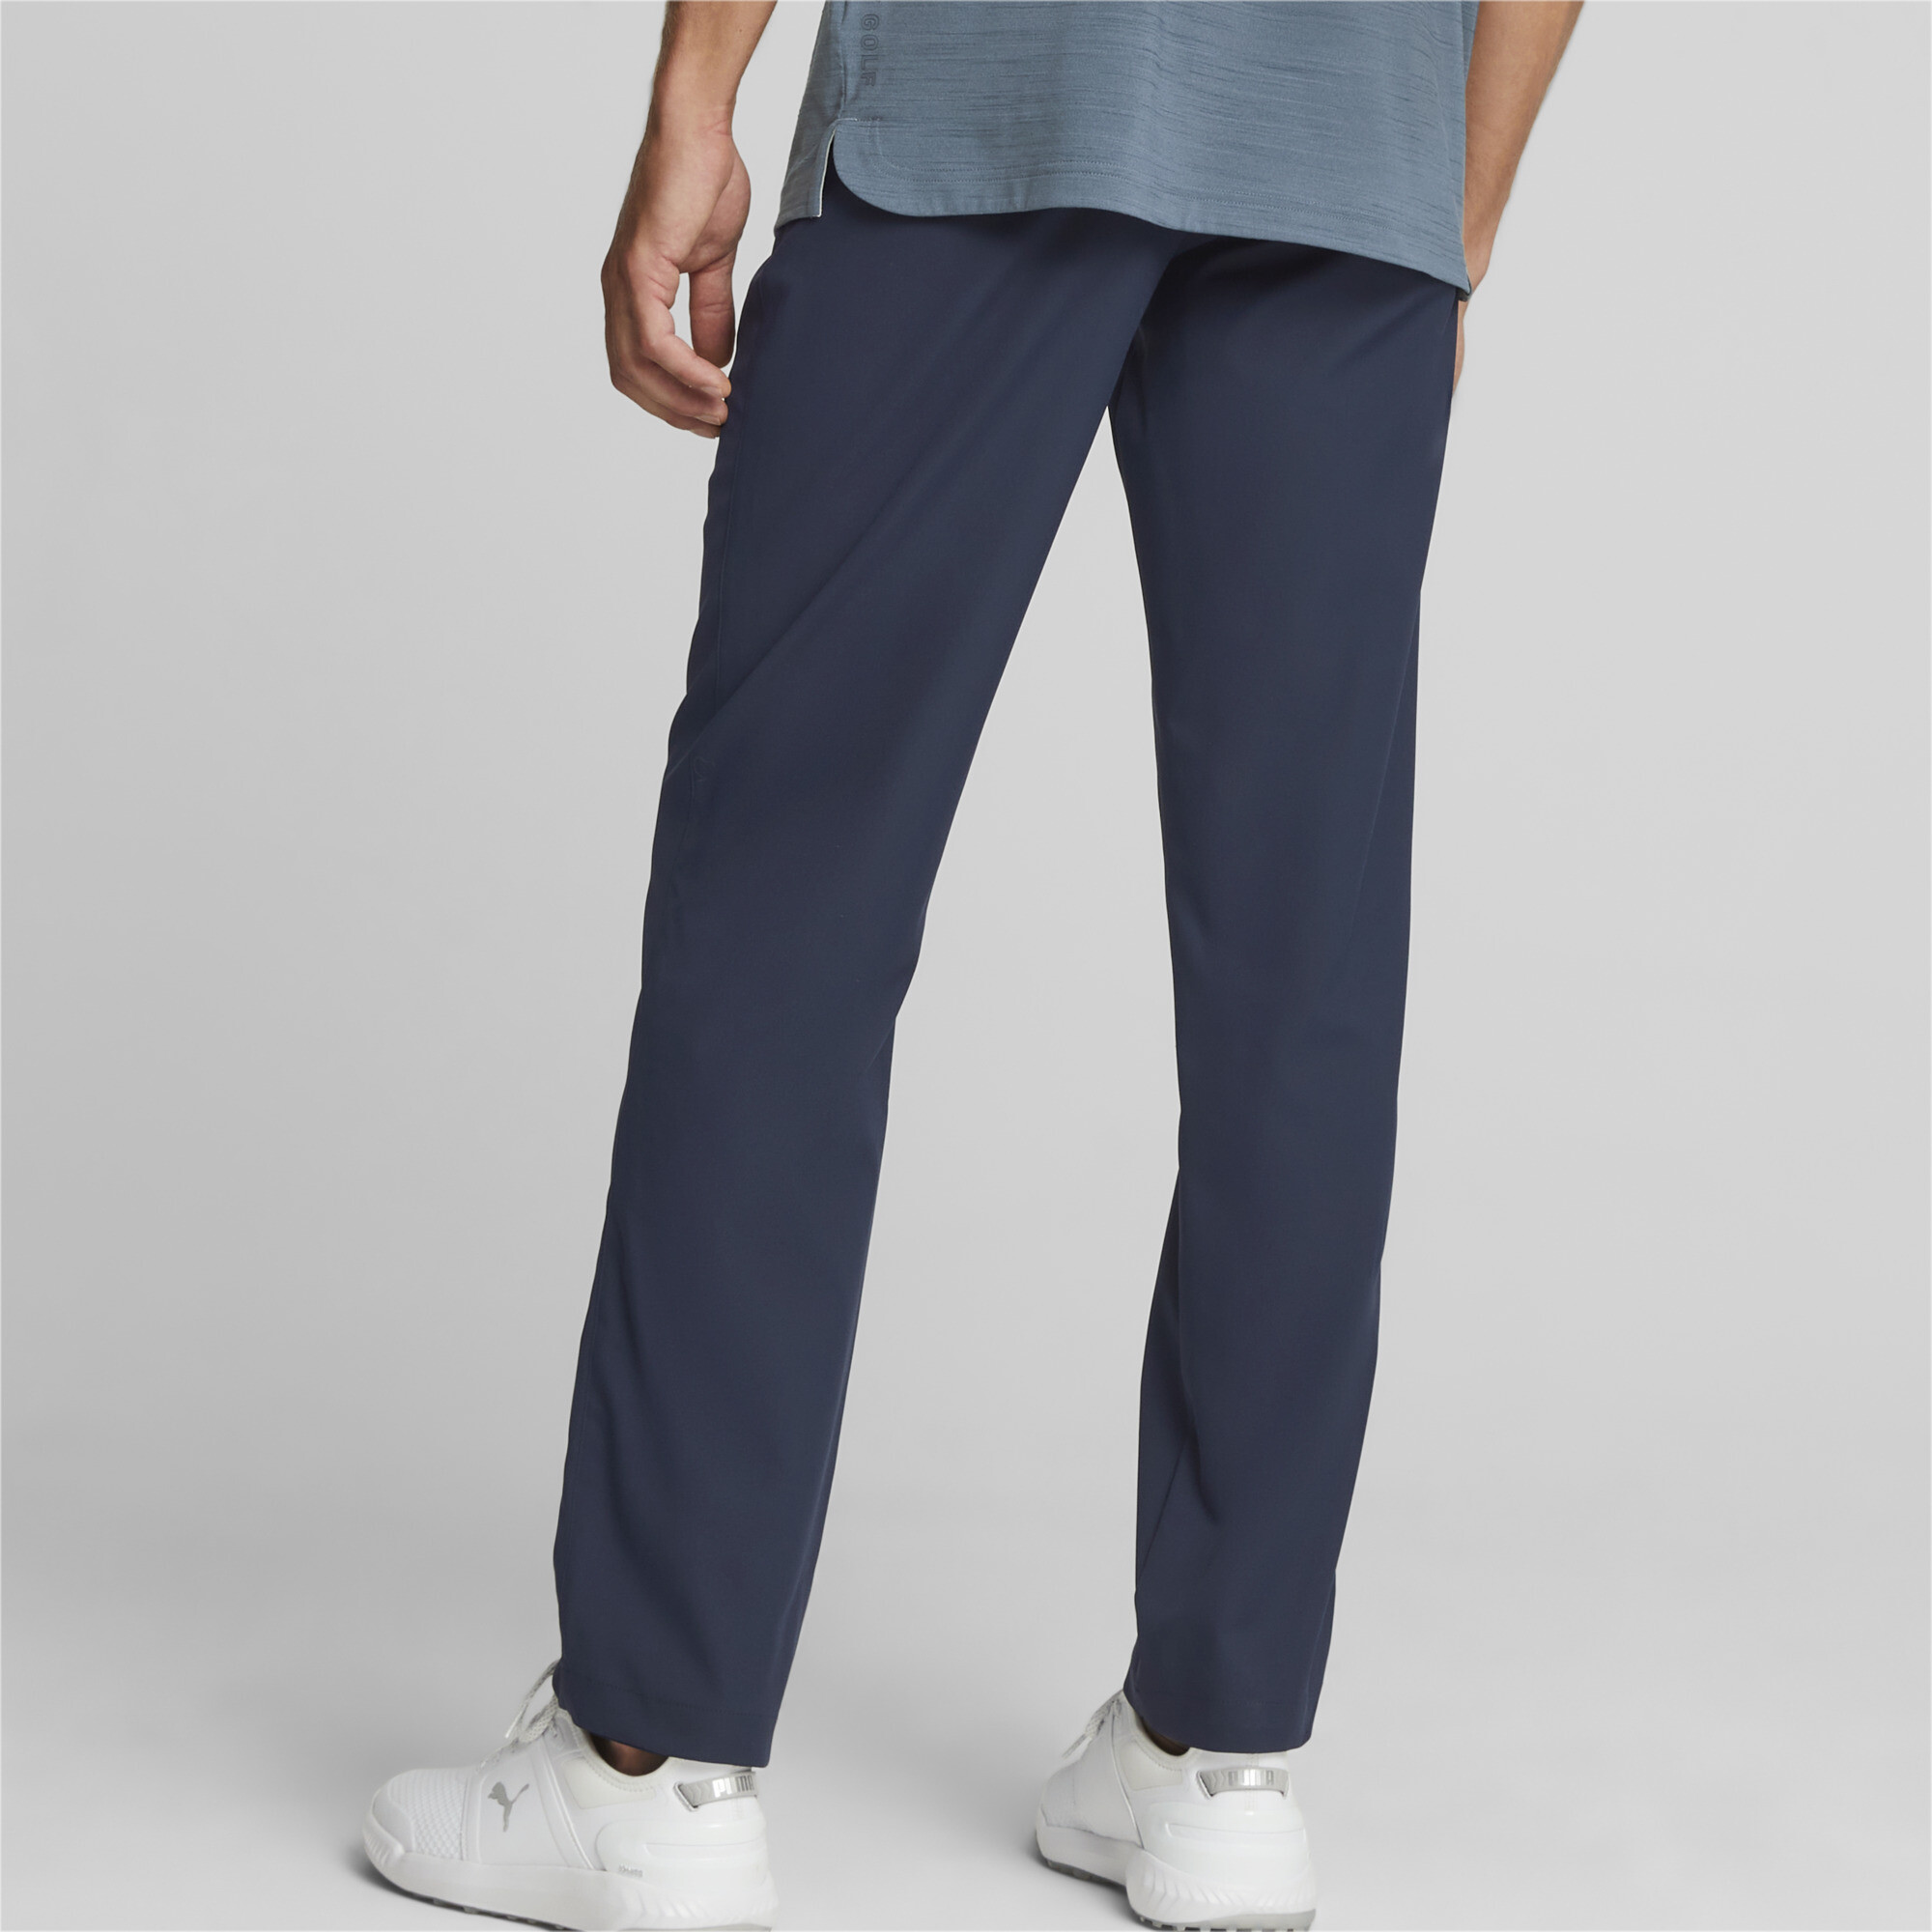 Men's Puma Dealer Golf Pants, Blue, Size 32/32, Clothing